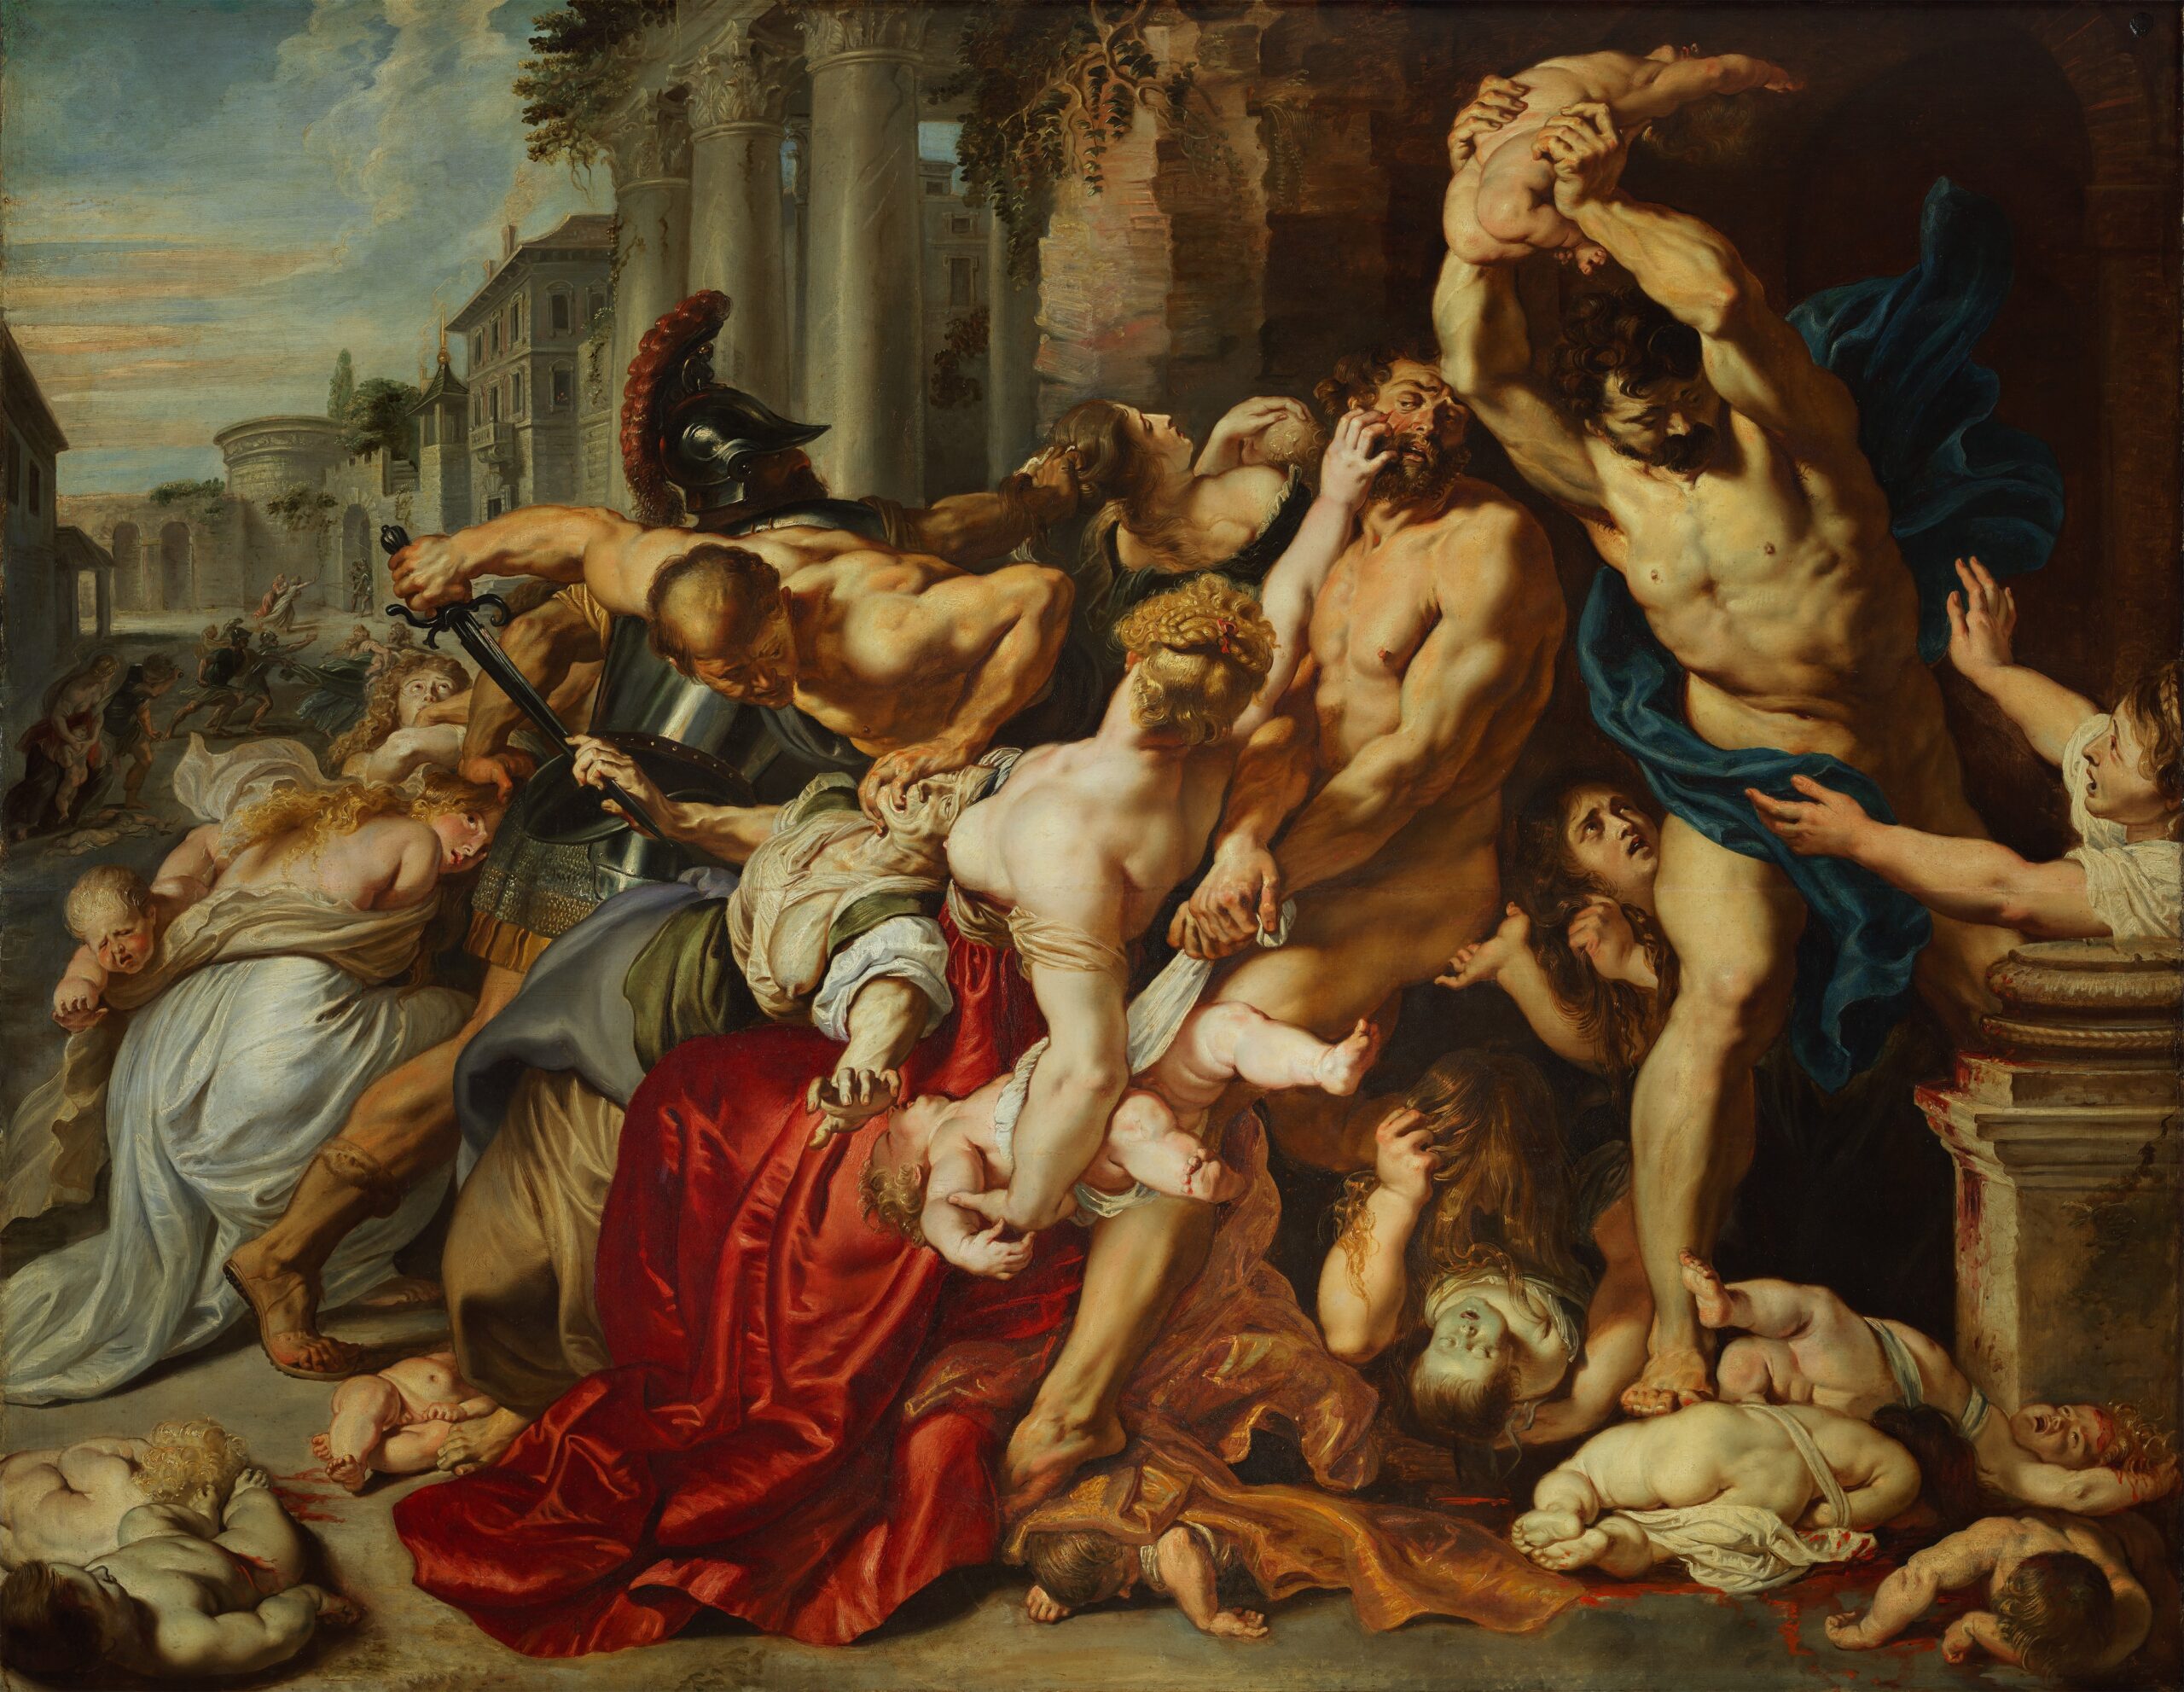 Massacre of the Innocents - Peter Paul Rubens